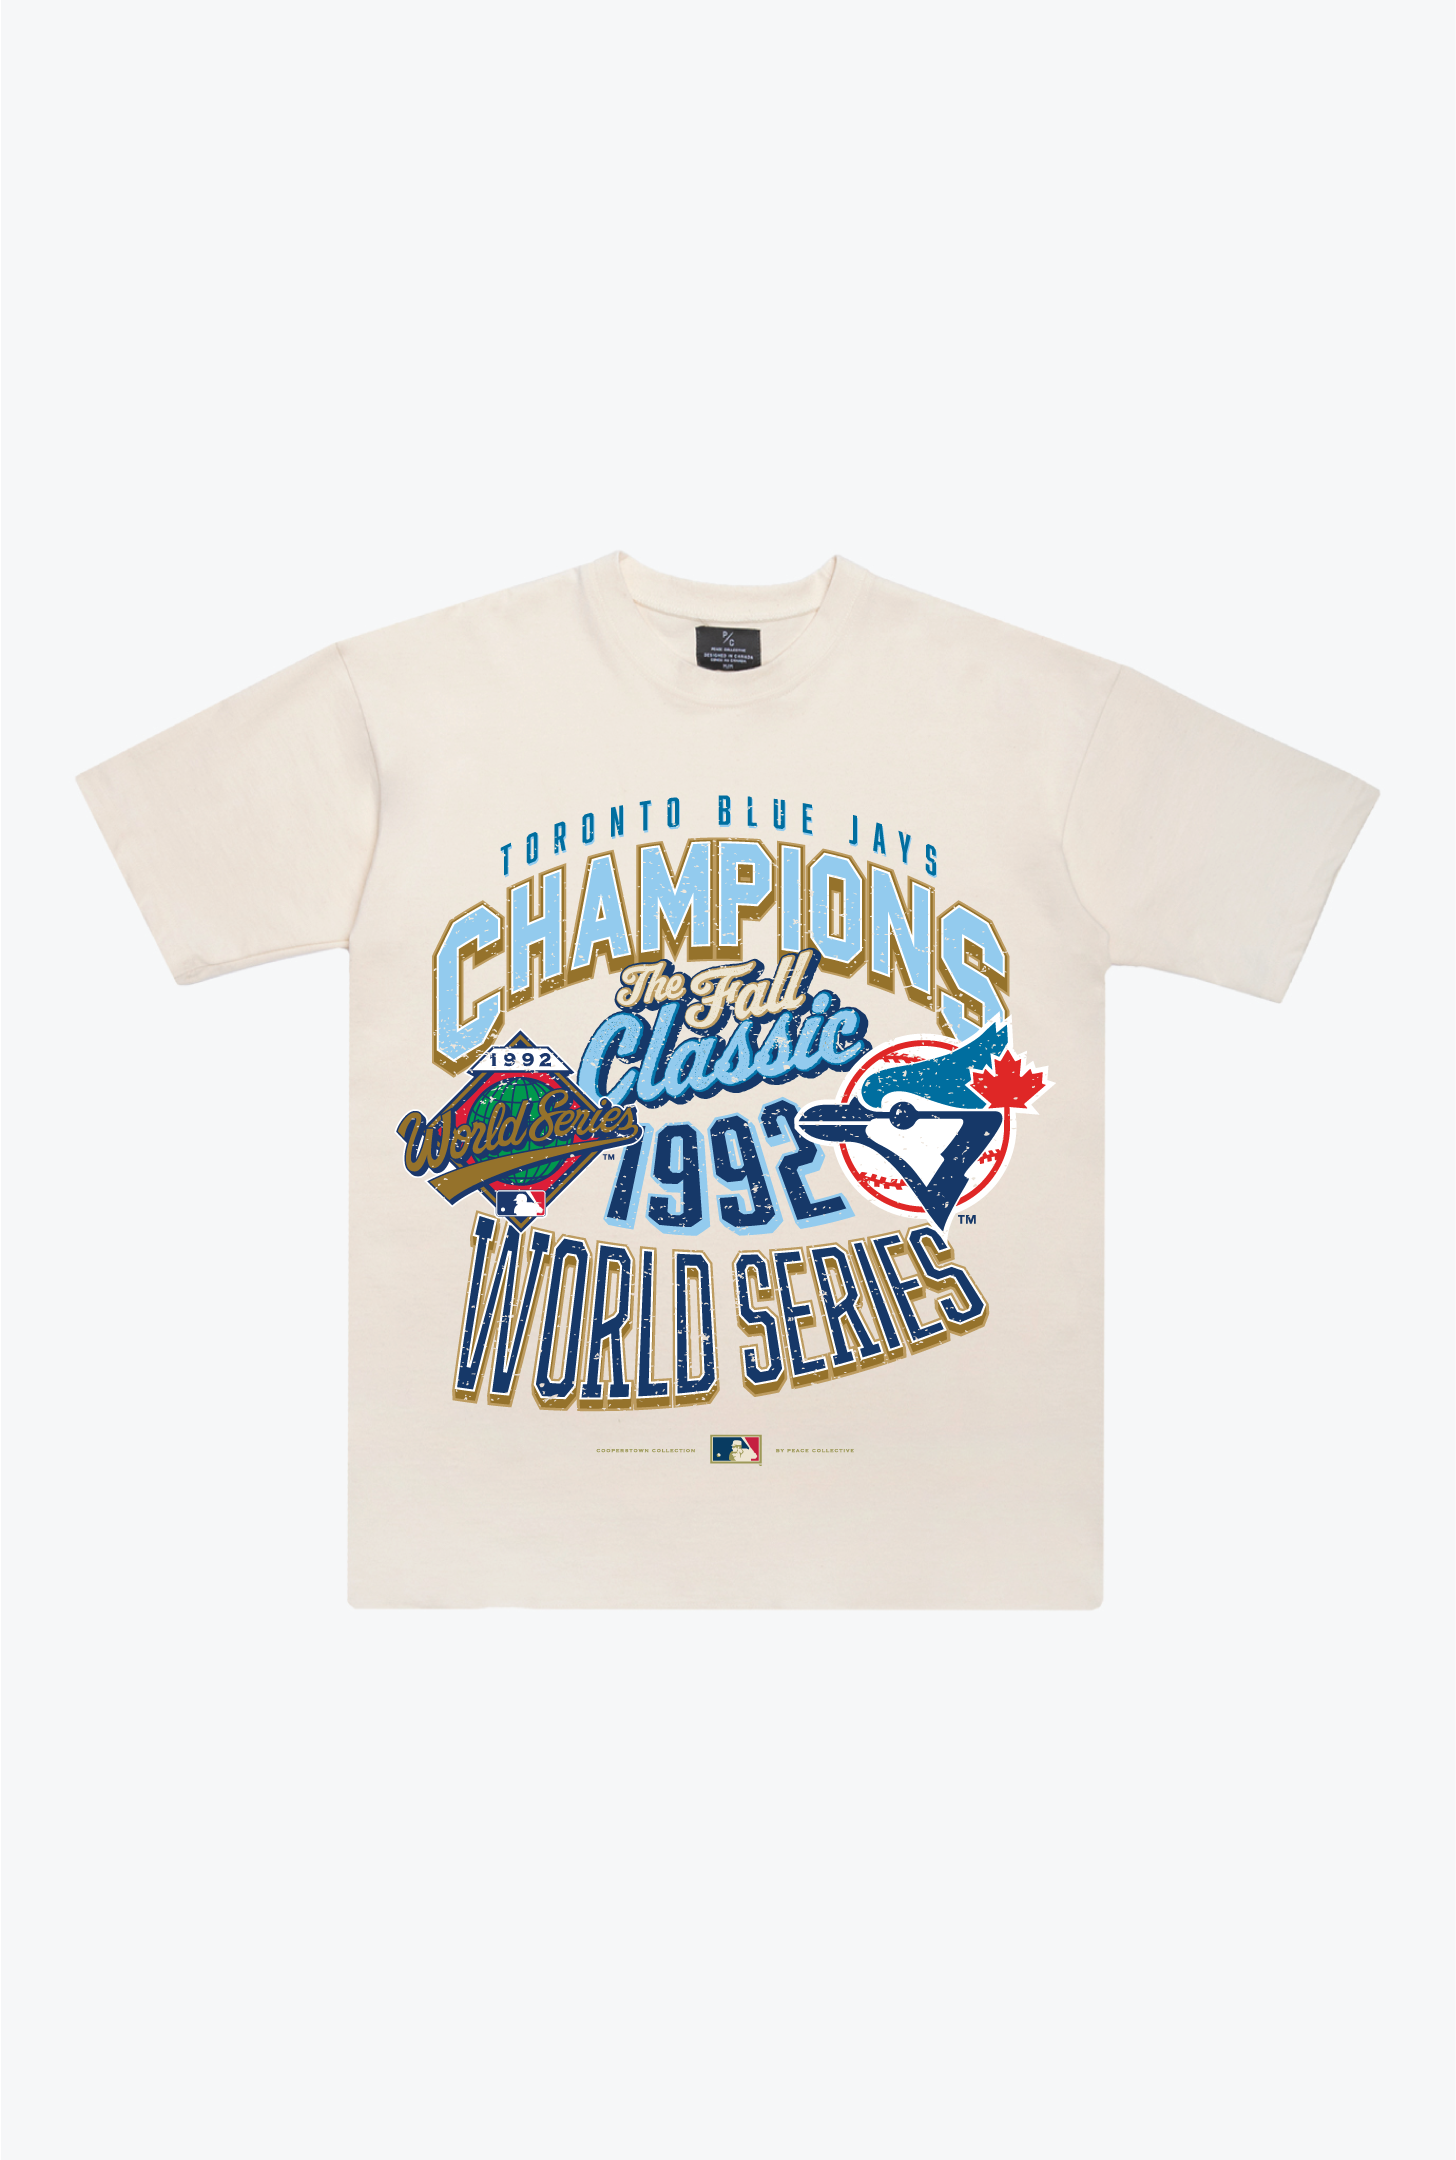 Toronto Blue Jays 1992 World Series Cooperstown Collection Premium T-Shirt - Natural